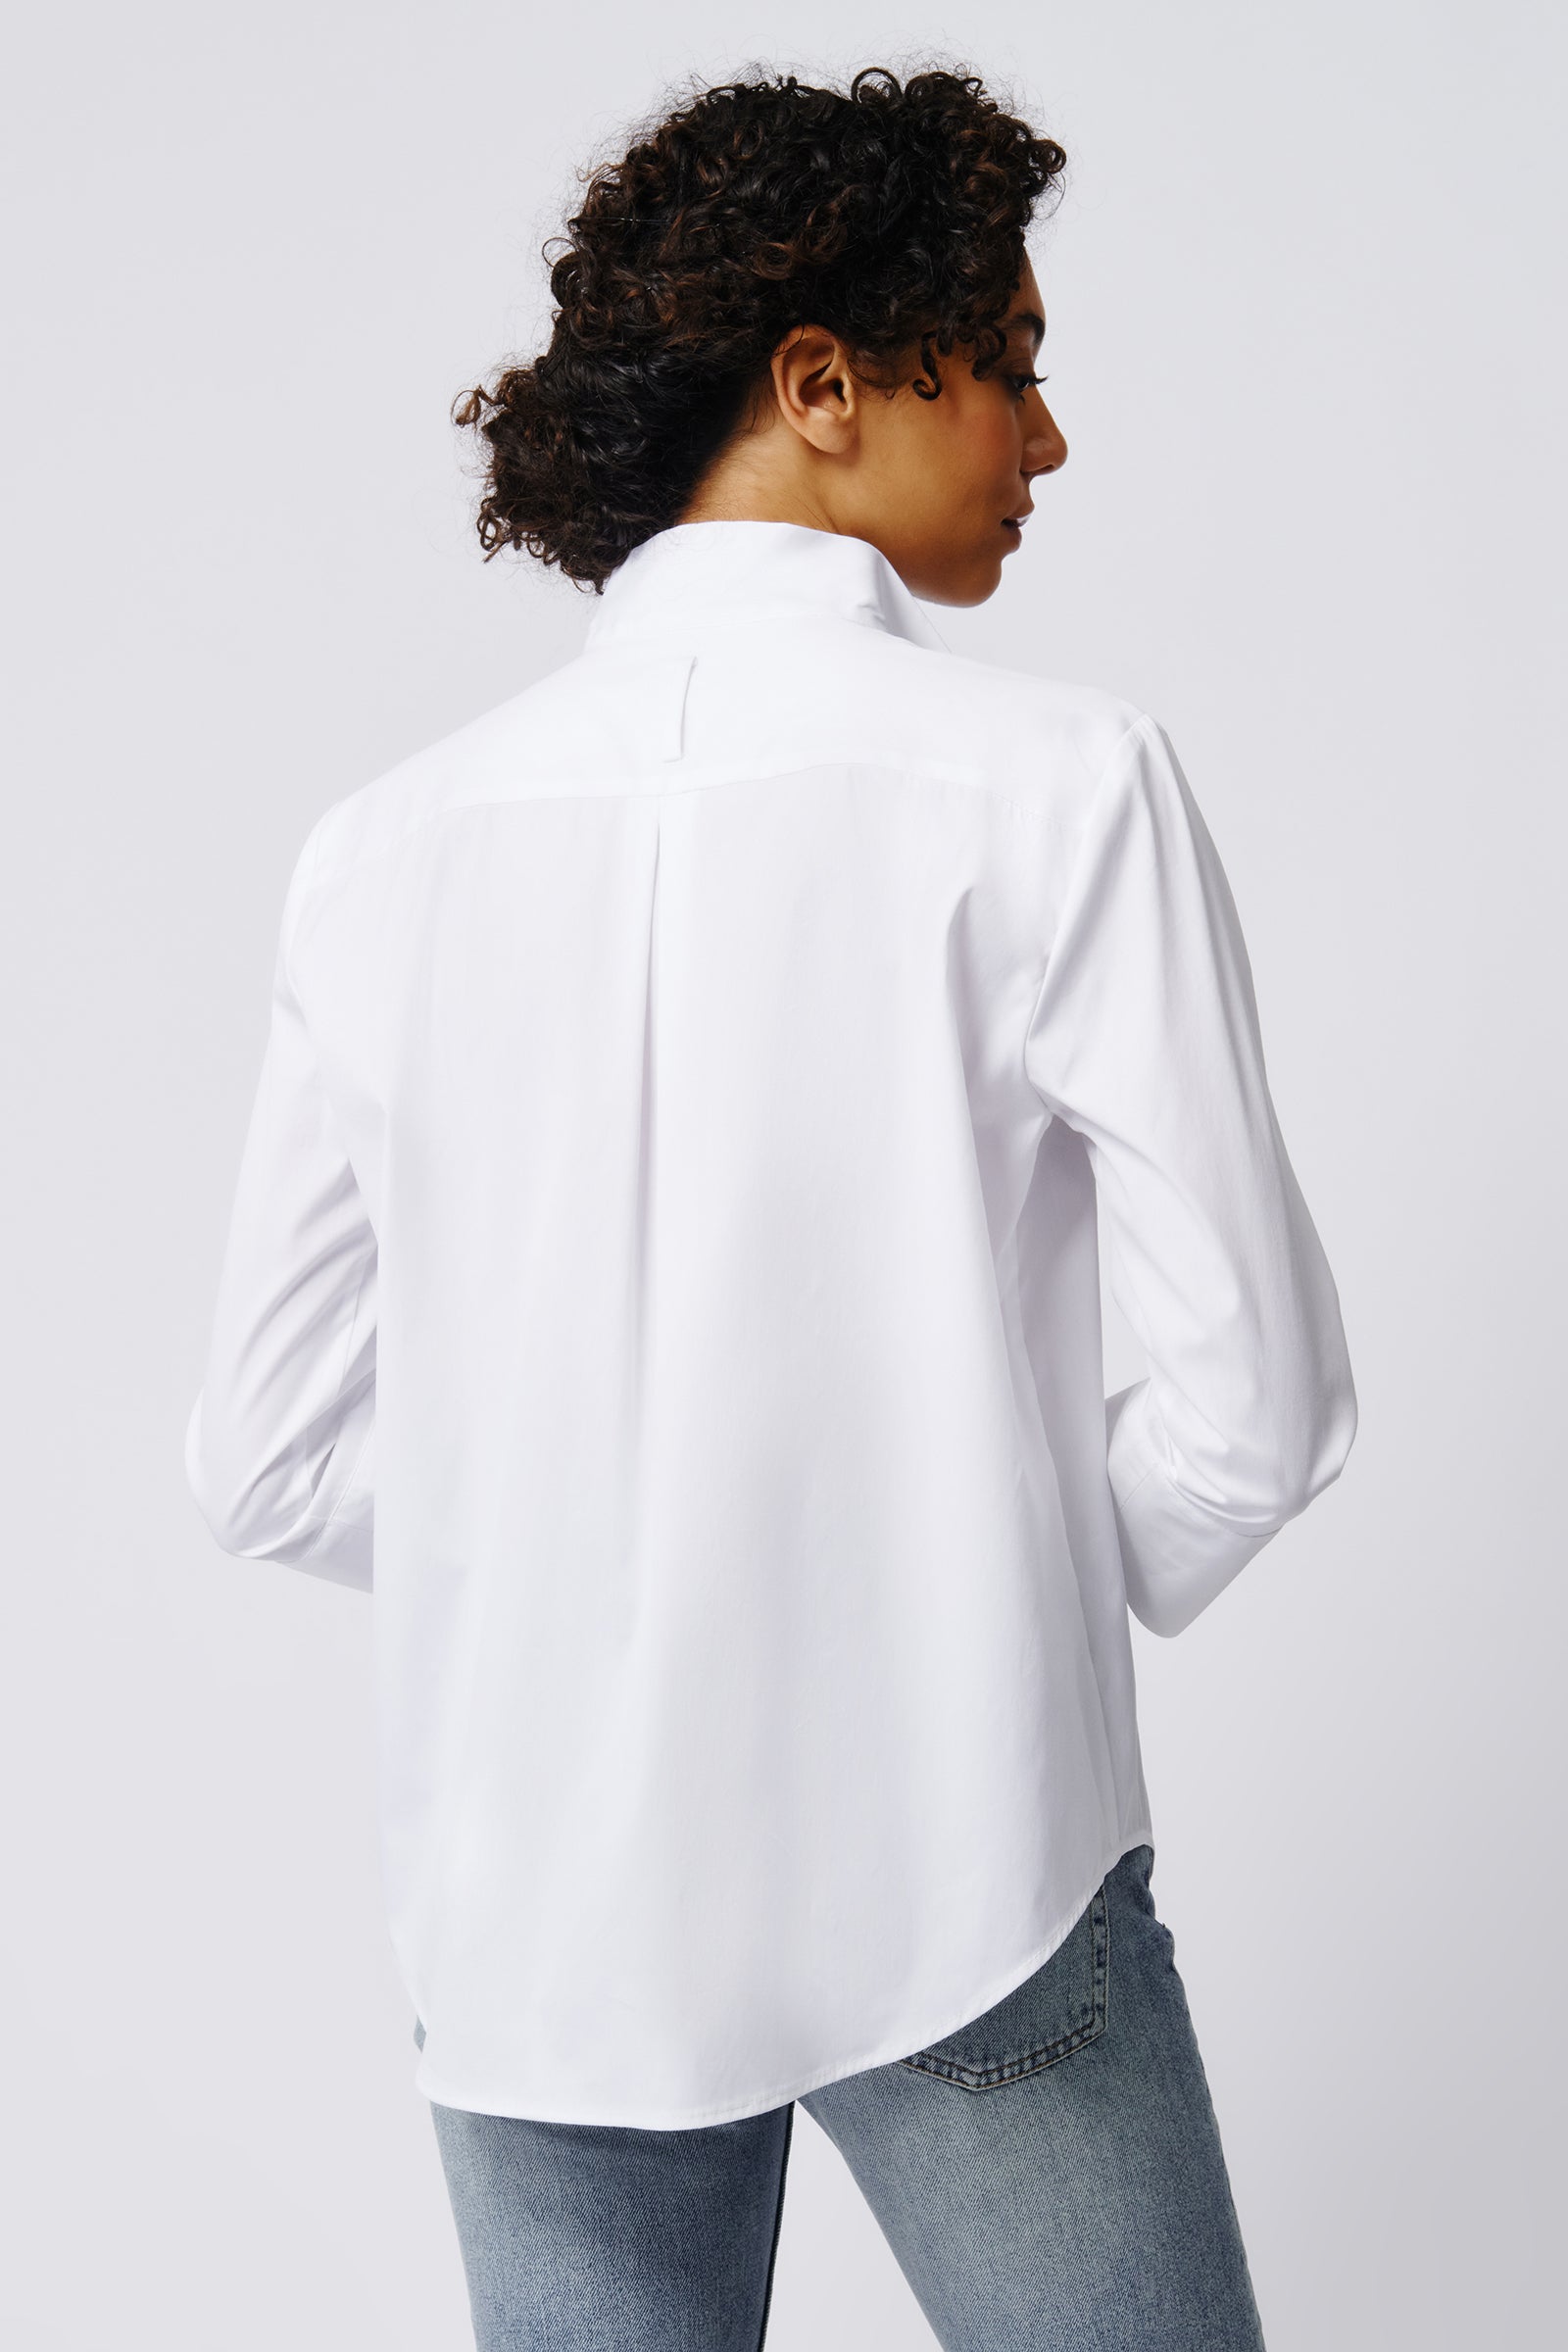 Kal Rieman Greta Placket Front Shirt in White Poplin on Model Side View Closeup